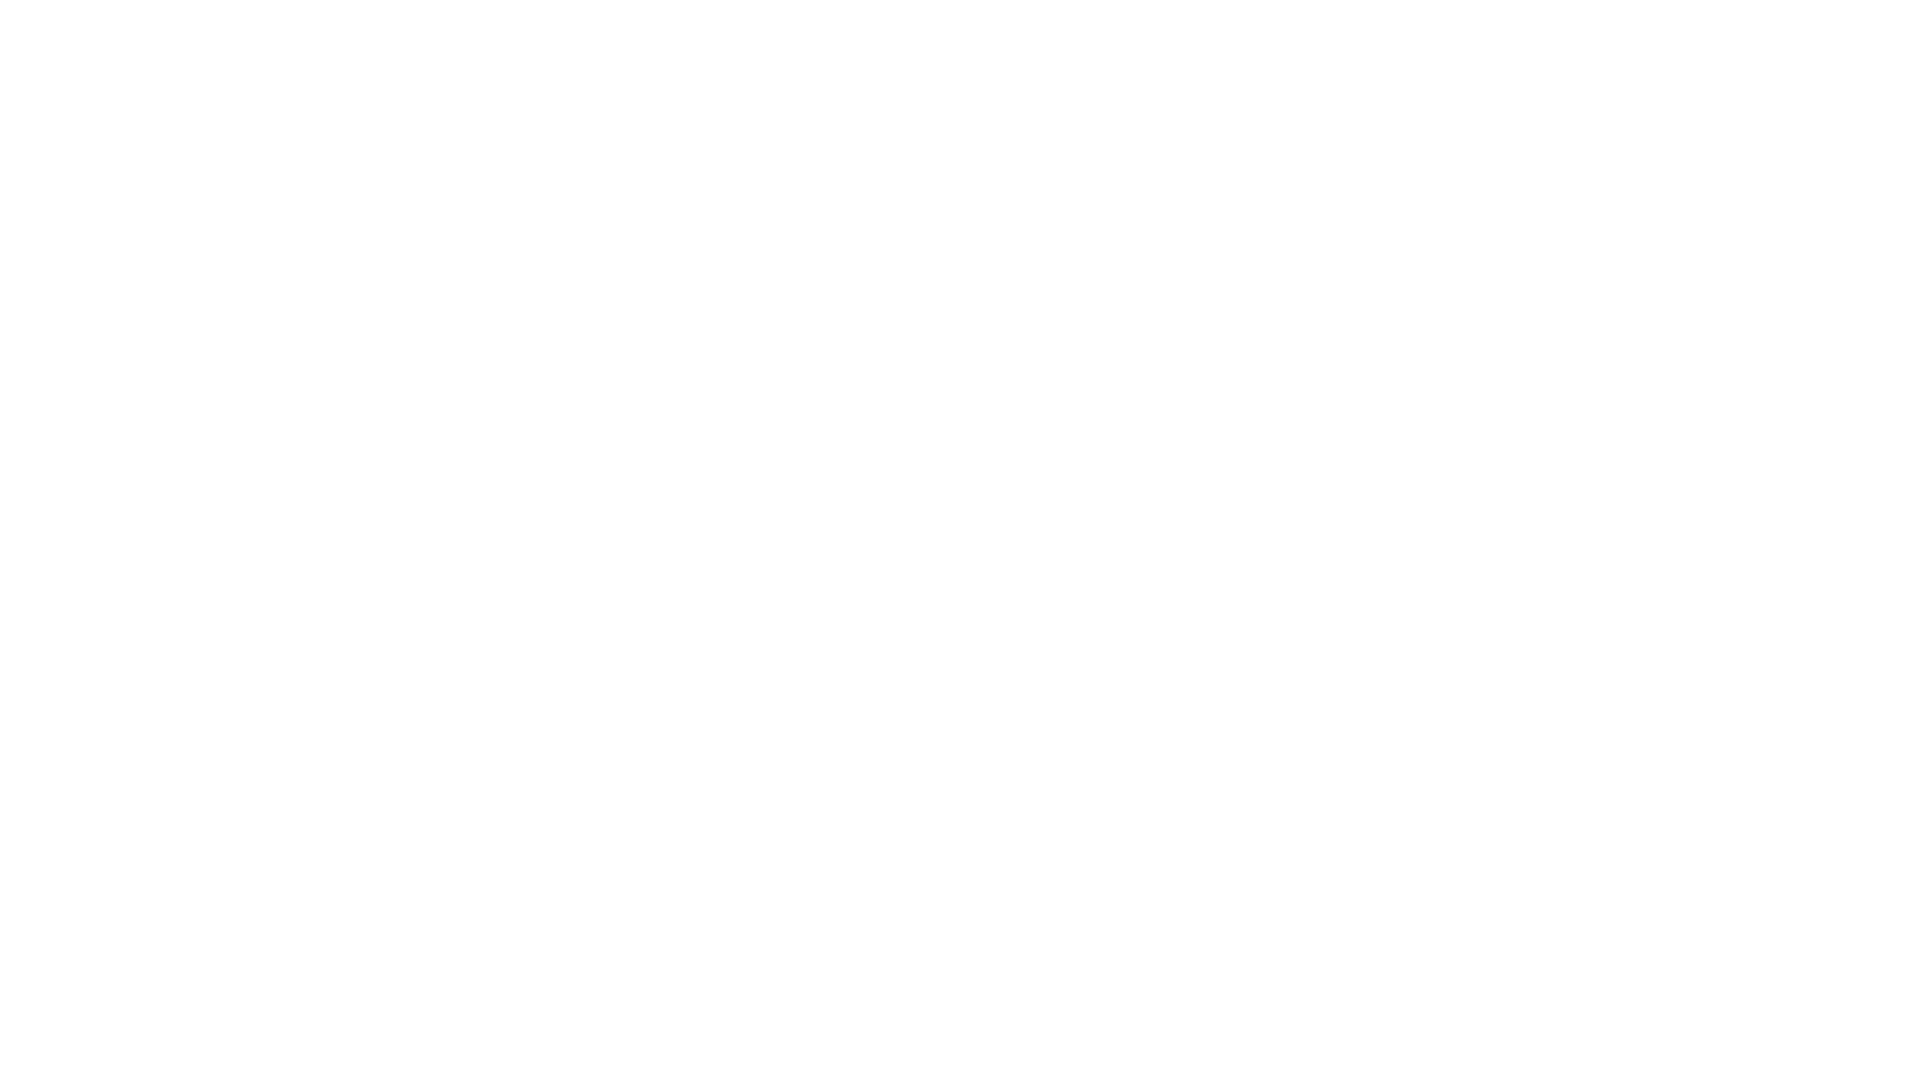 Legacy Apparel & Artisan Goods